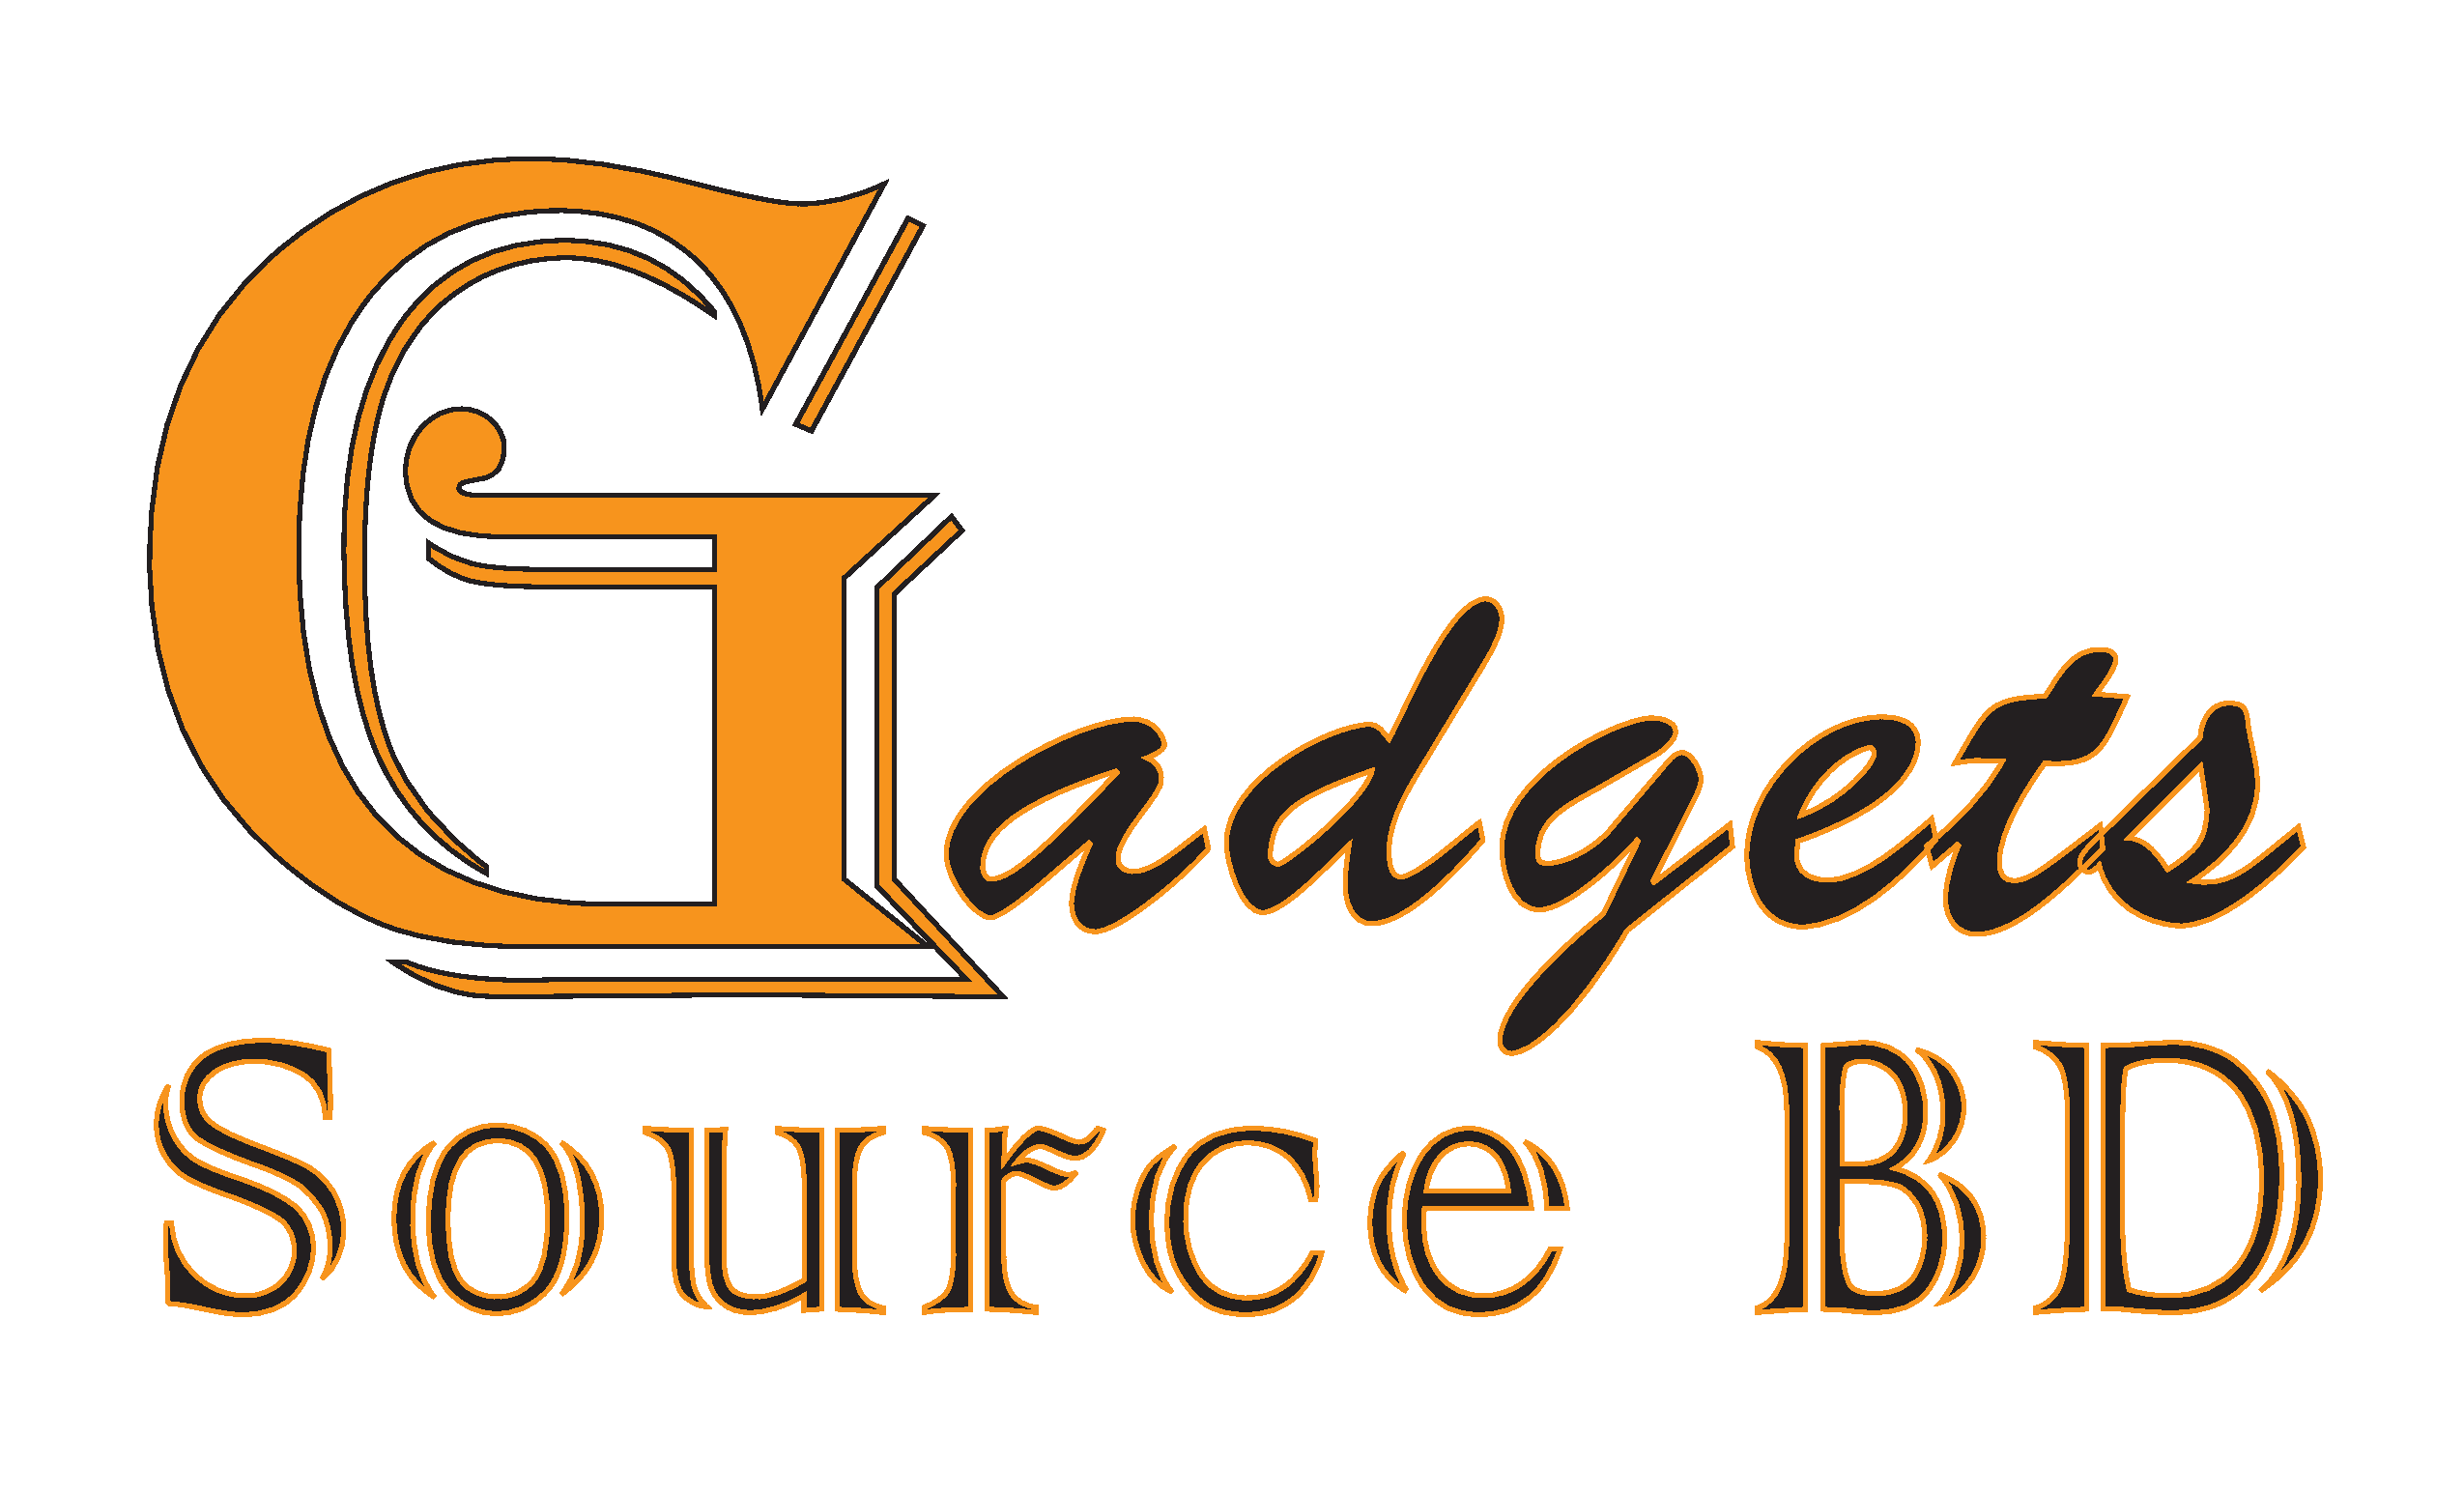 gadgets source bd